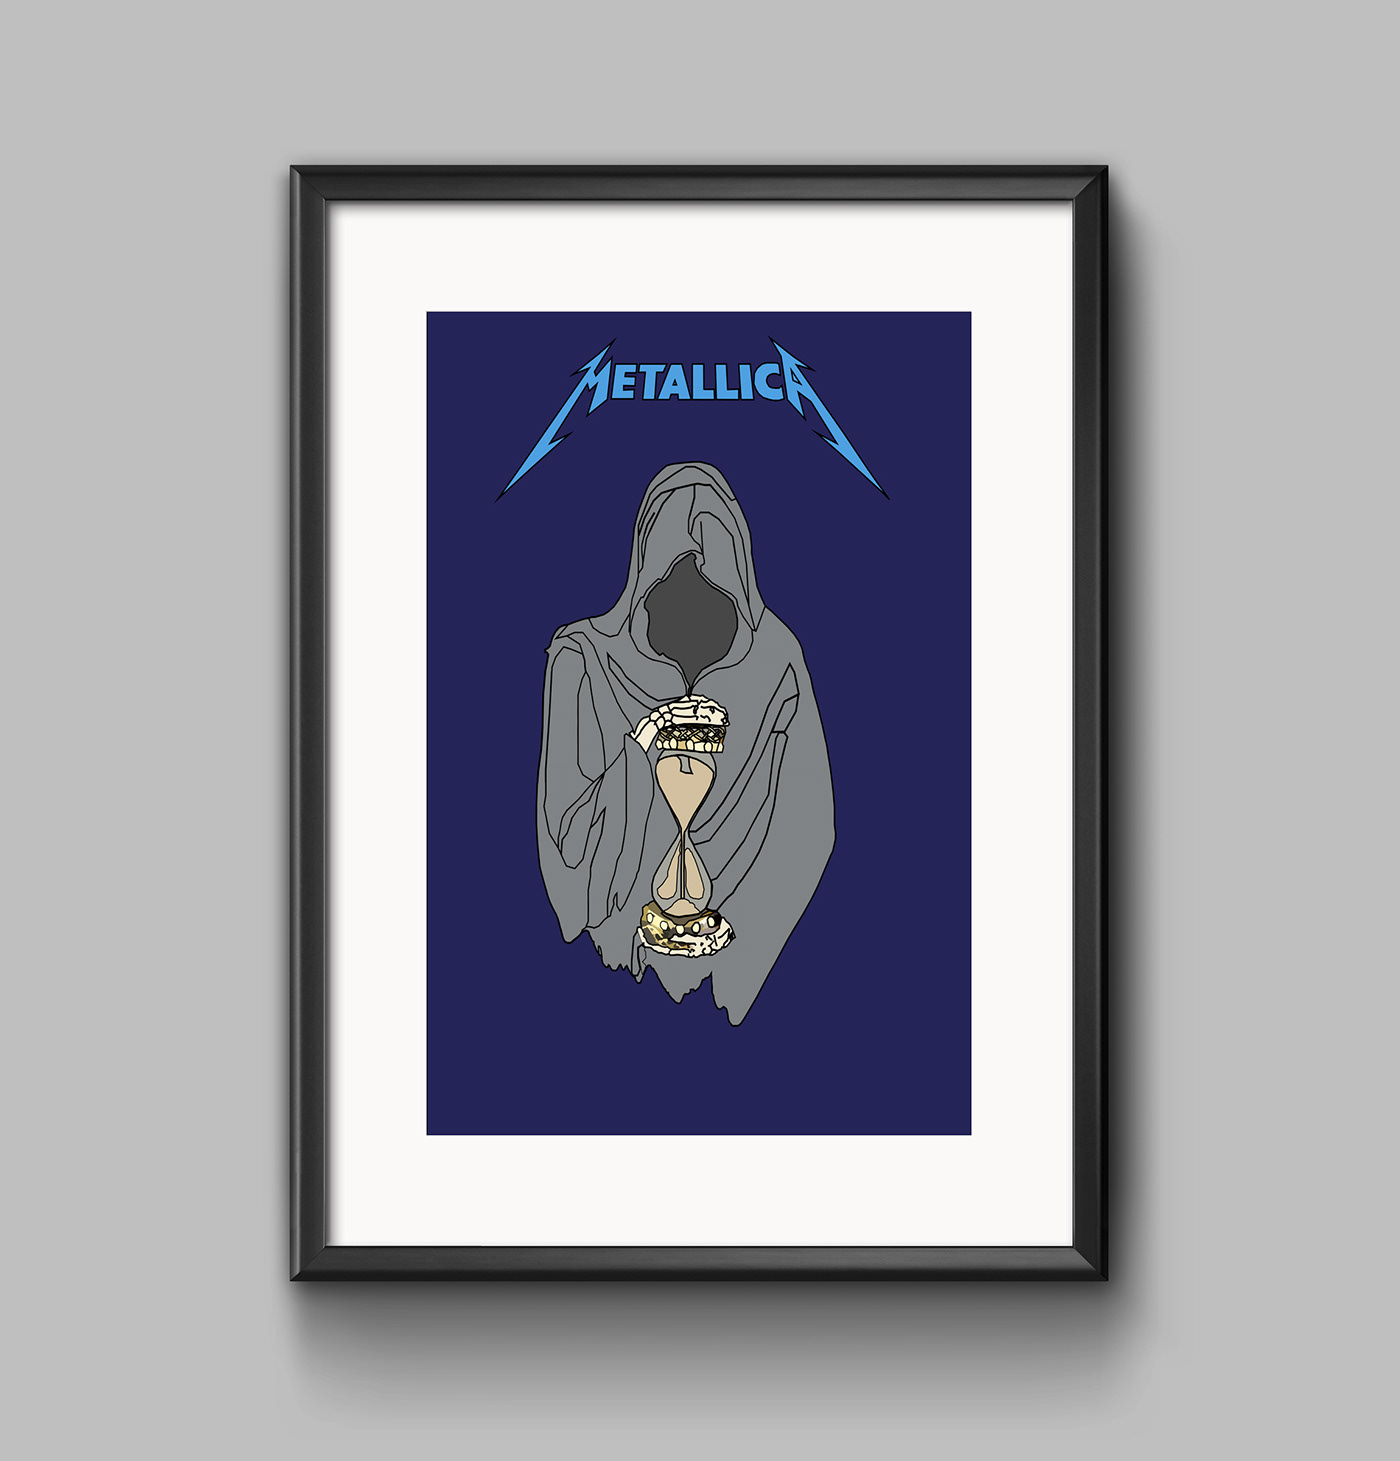 adobecreativecloud fanmade Illustrator Metallica poster